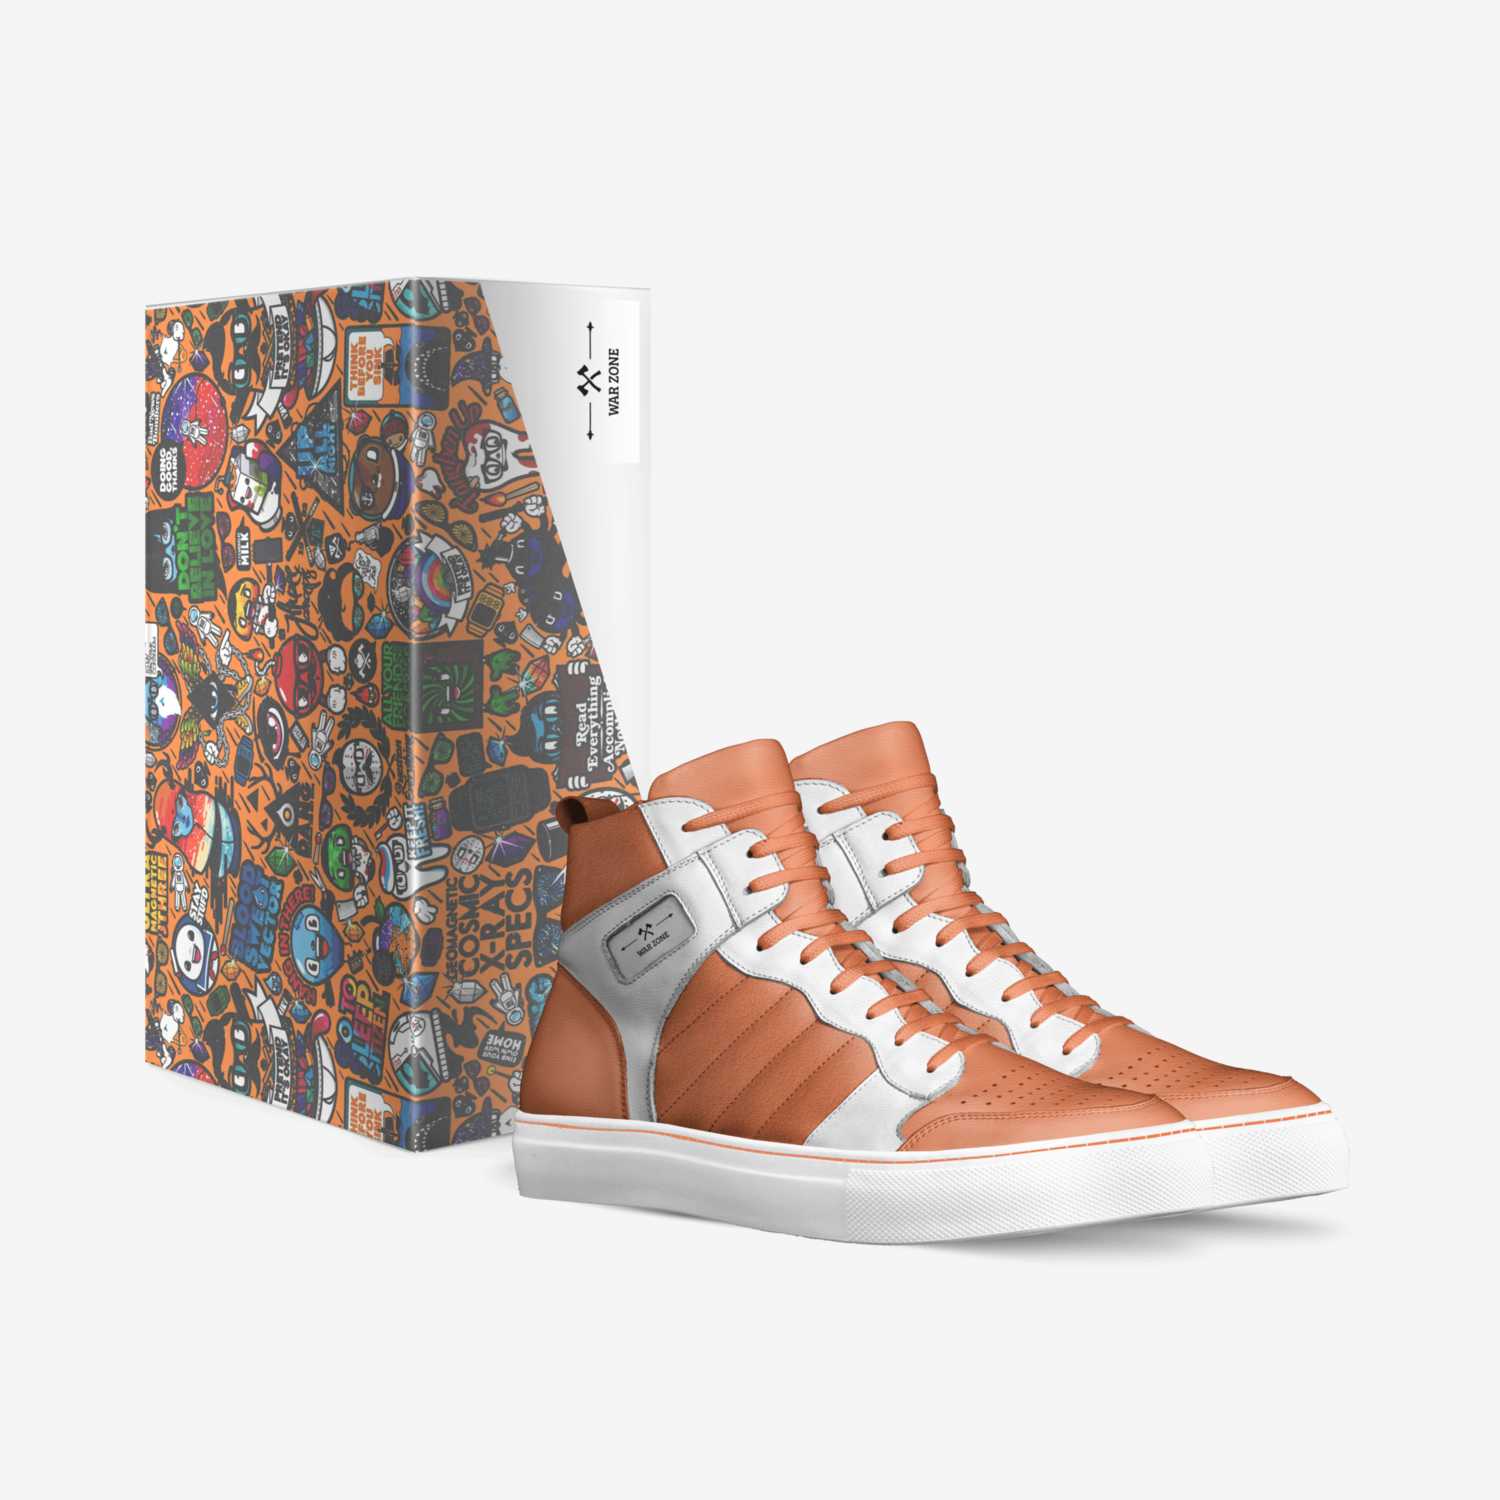 War zone custom made in Italy shoes by Peso Santana | Box view